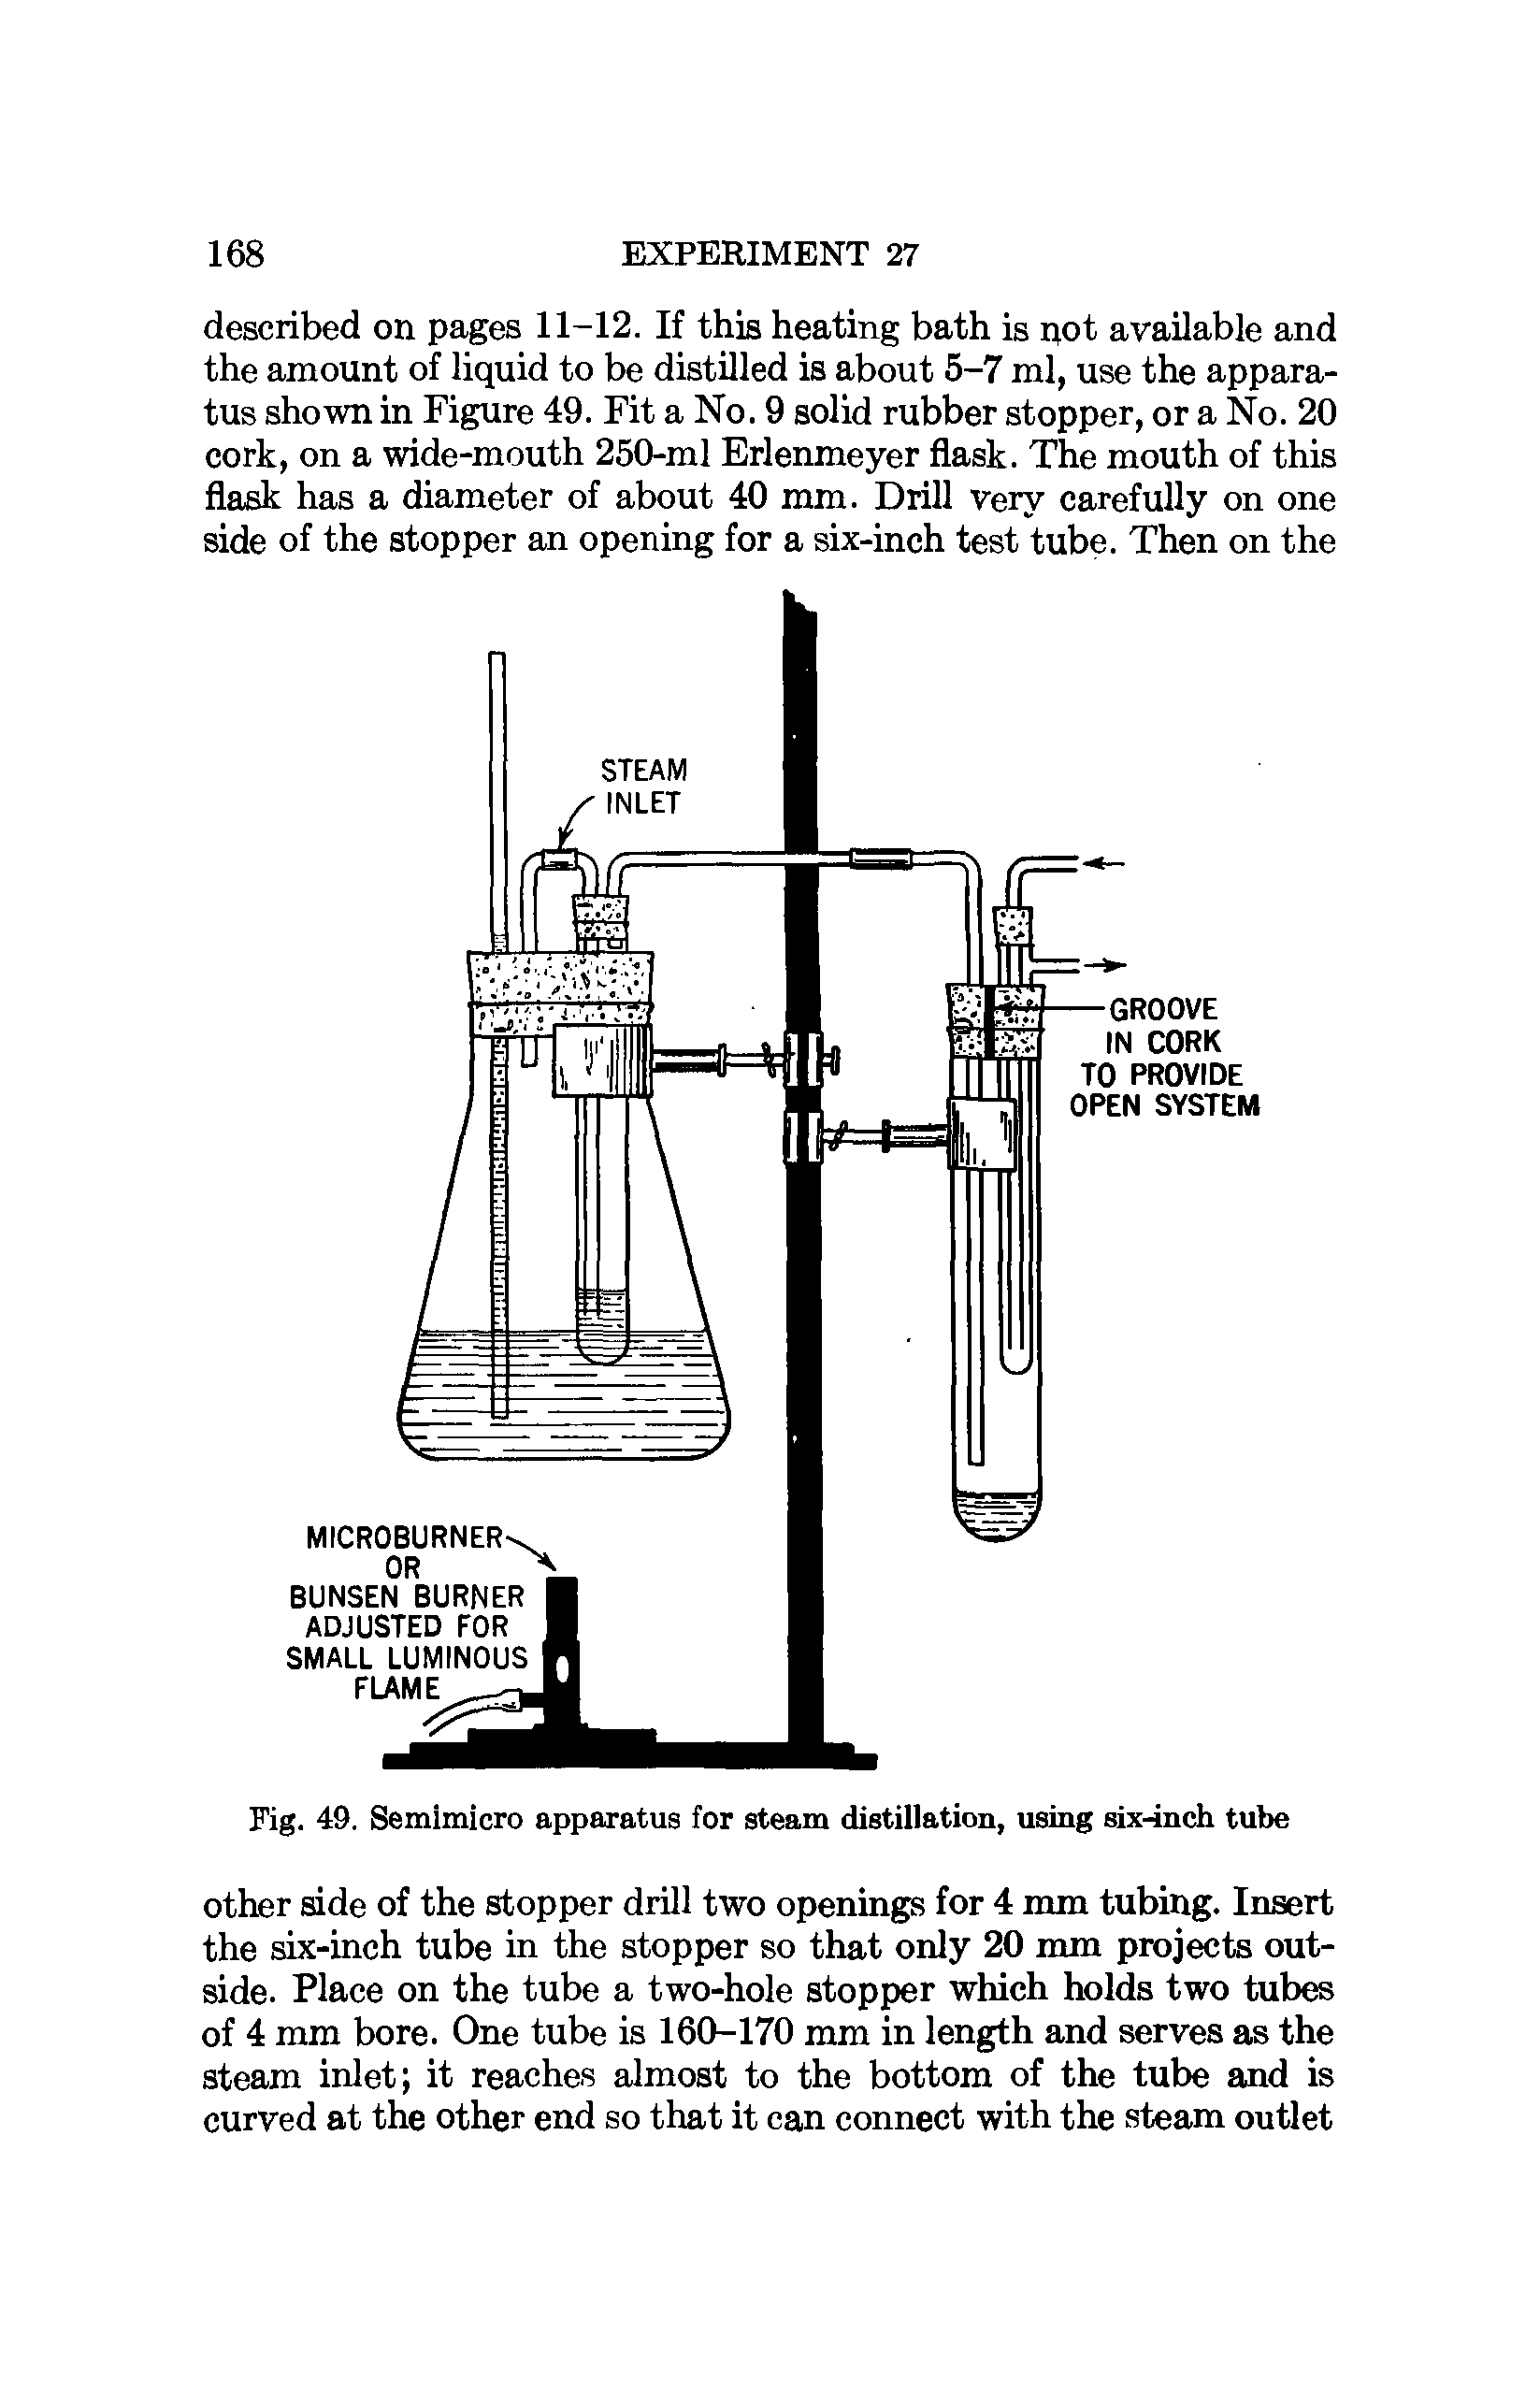 Fig. 49. Semimicro apparatus for steam distillation, using six-inch tube...